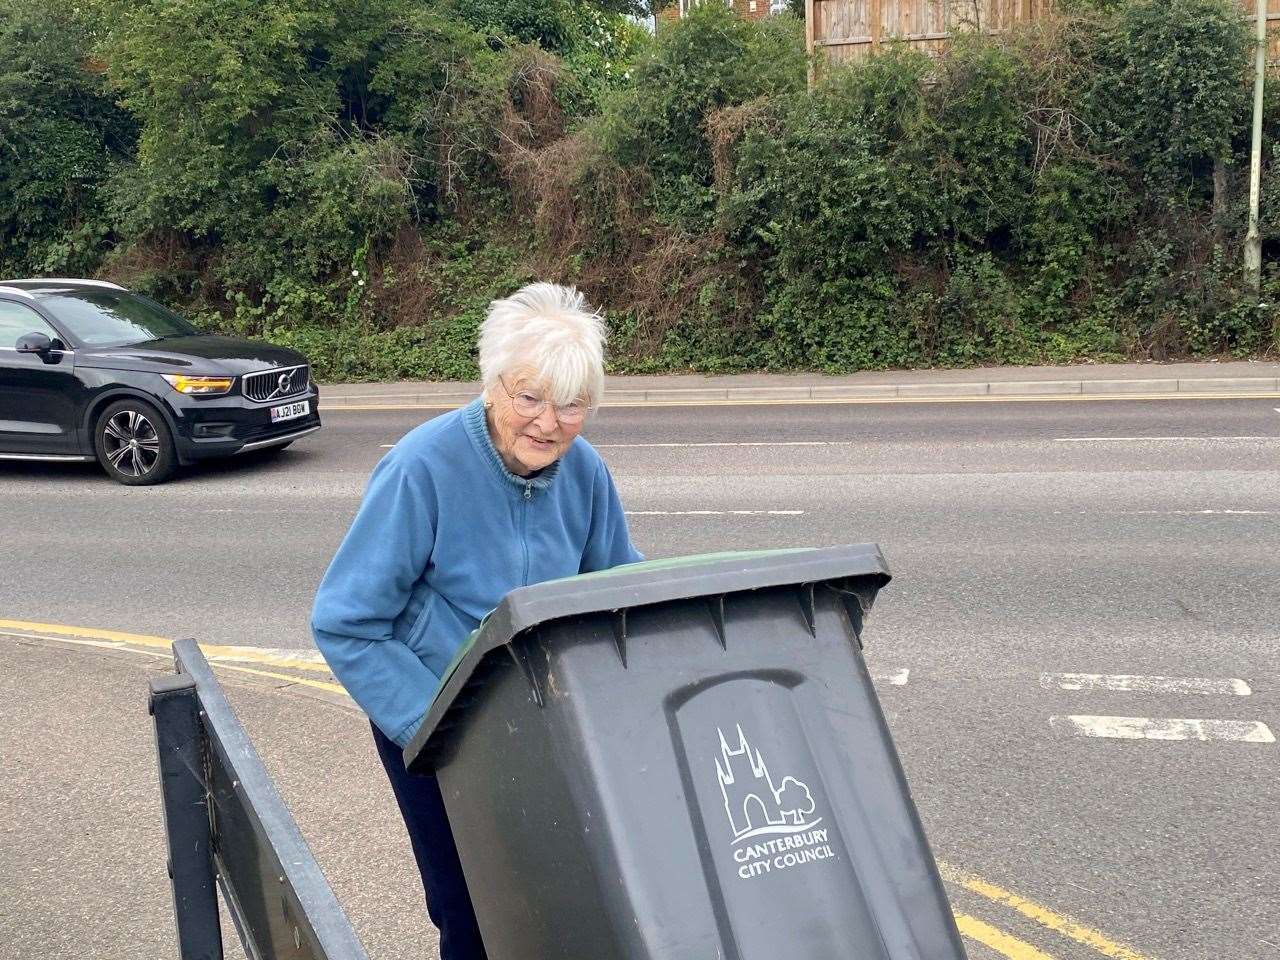 Nan Miller pushed the garden waste bin almost two miles through Canterbury